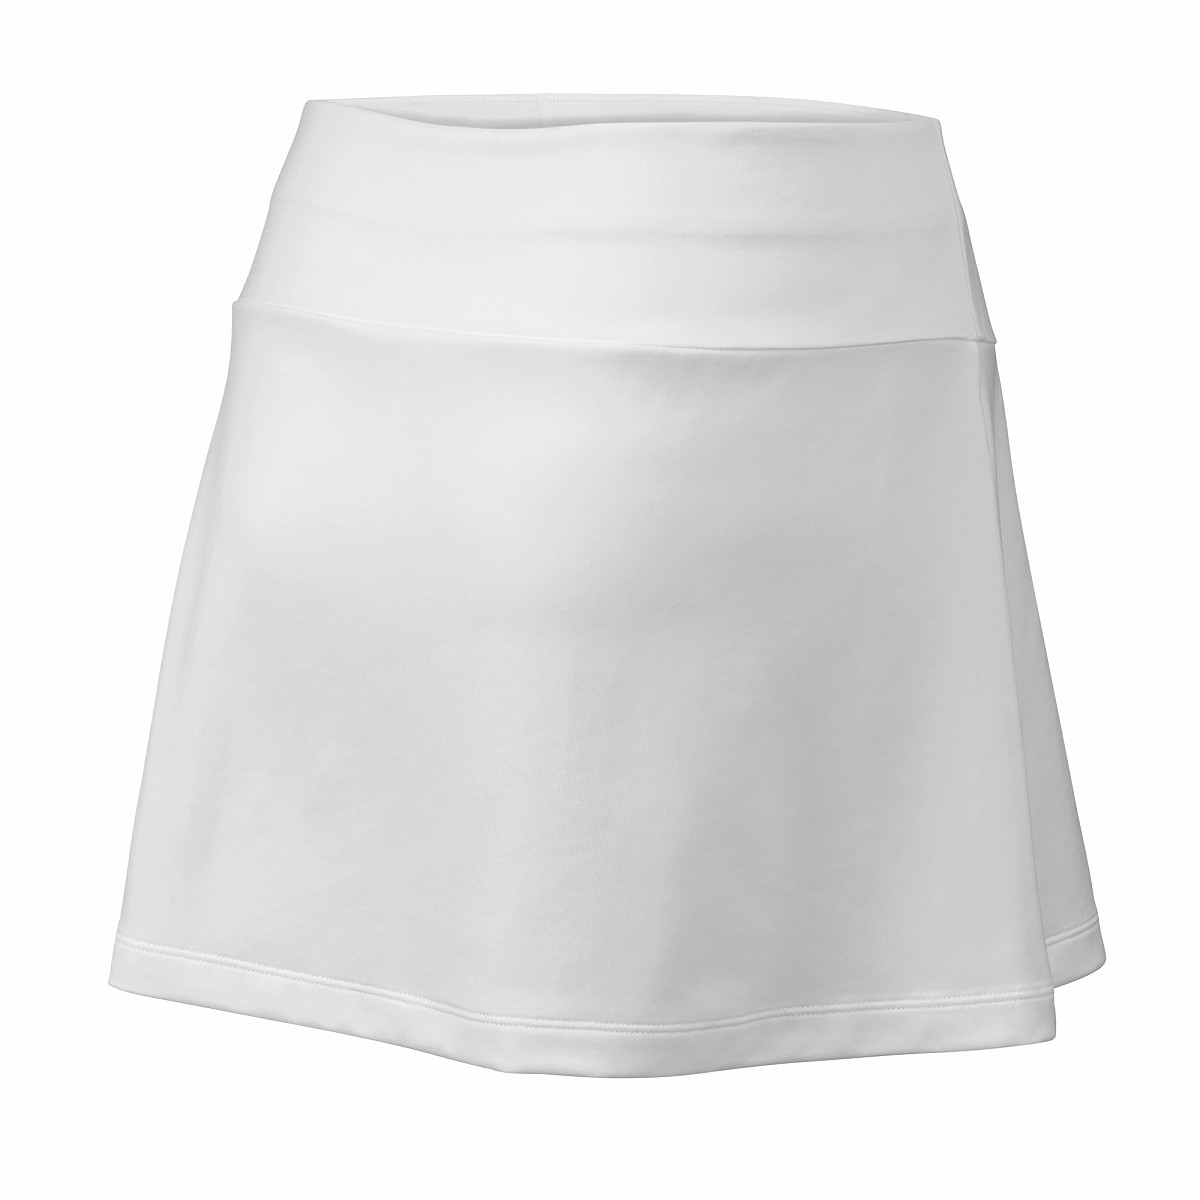 Wilson Womens Core 12.5 Inch Tennis Skirt - White RRP £ 30.00 NOW £22.99